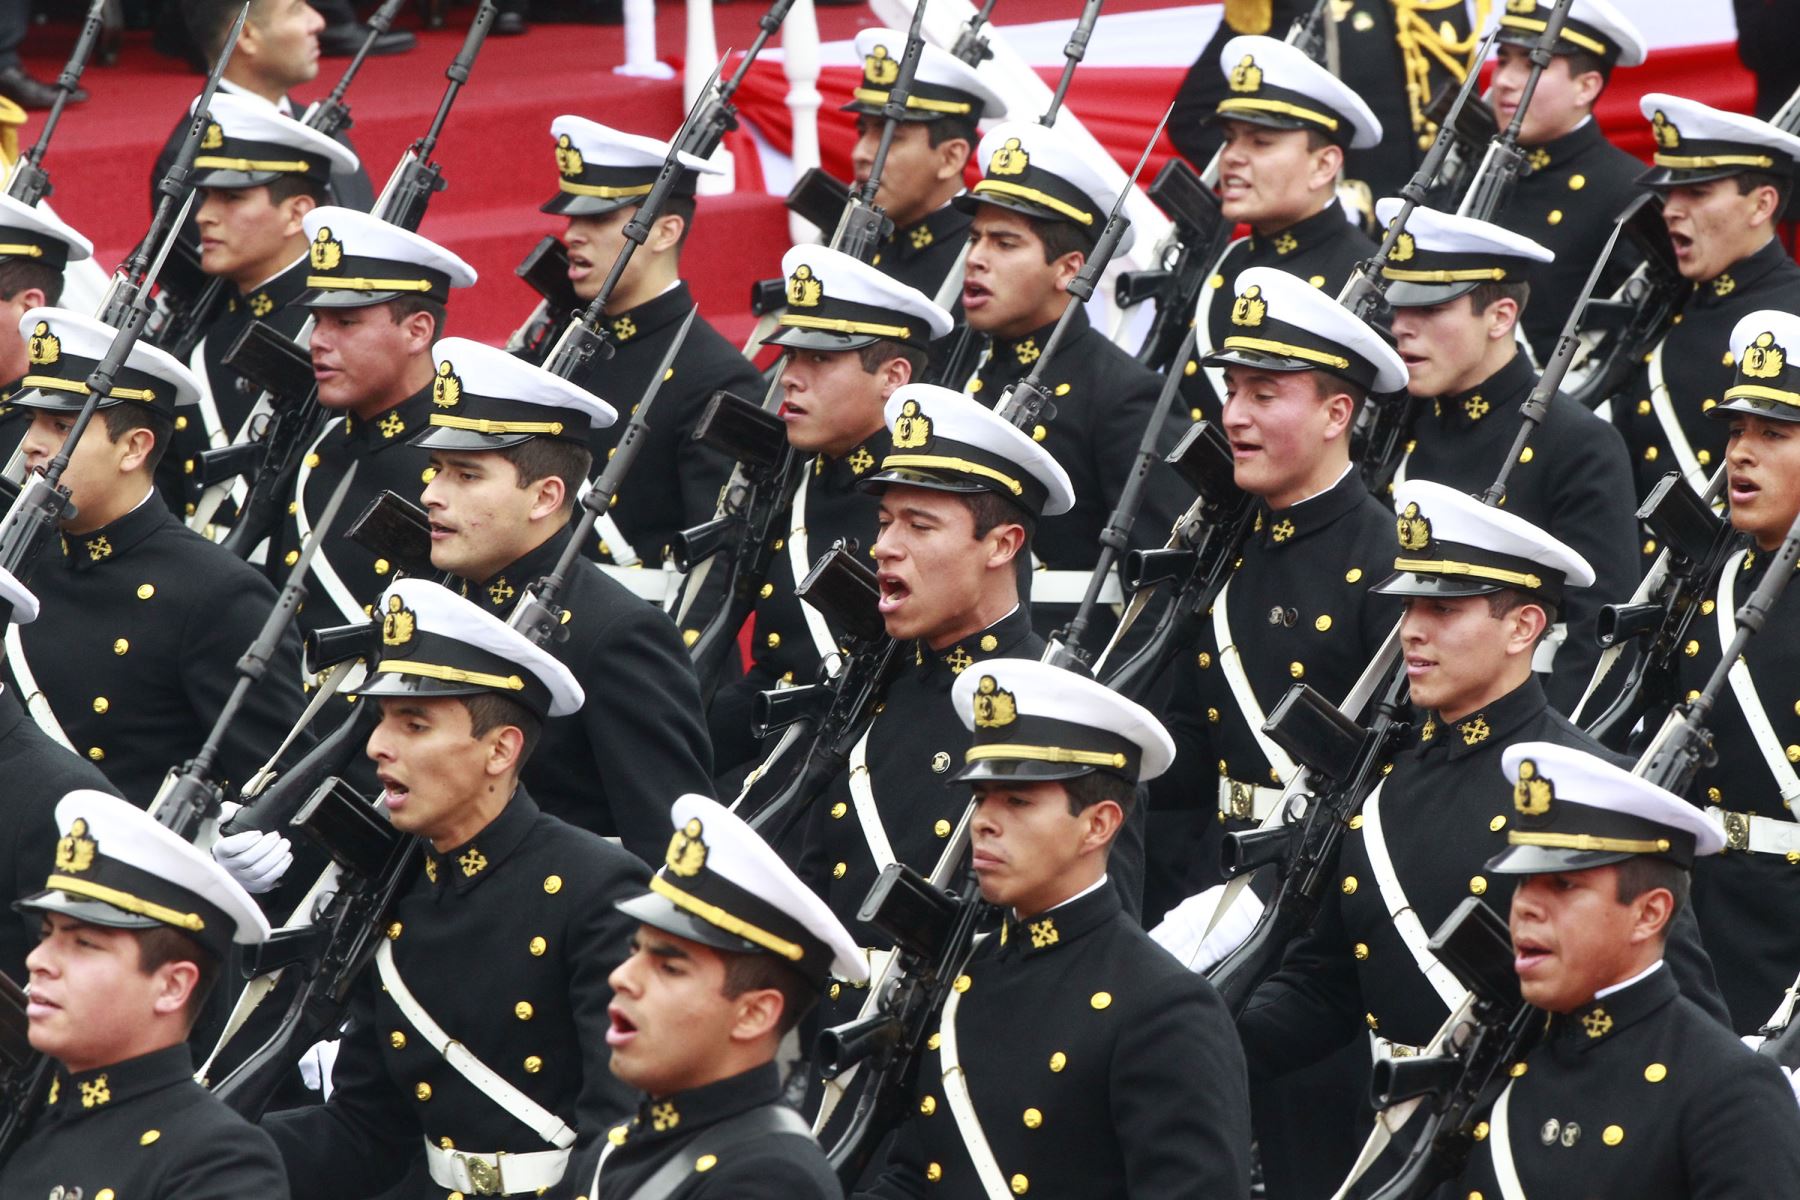 Parada Militar Marina de Guerra del Perú desfiló con orgullo y